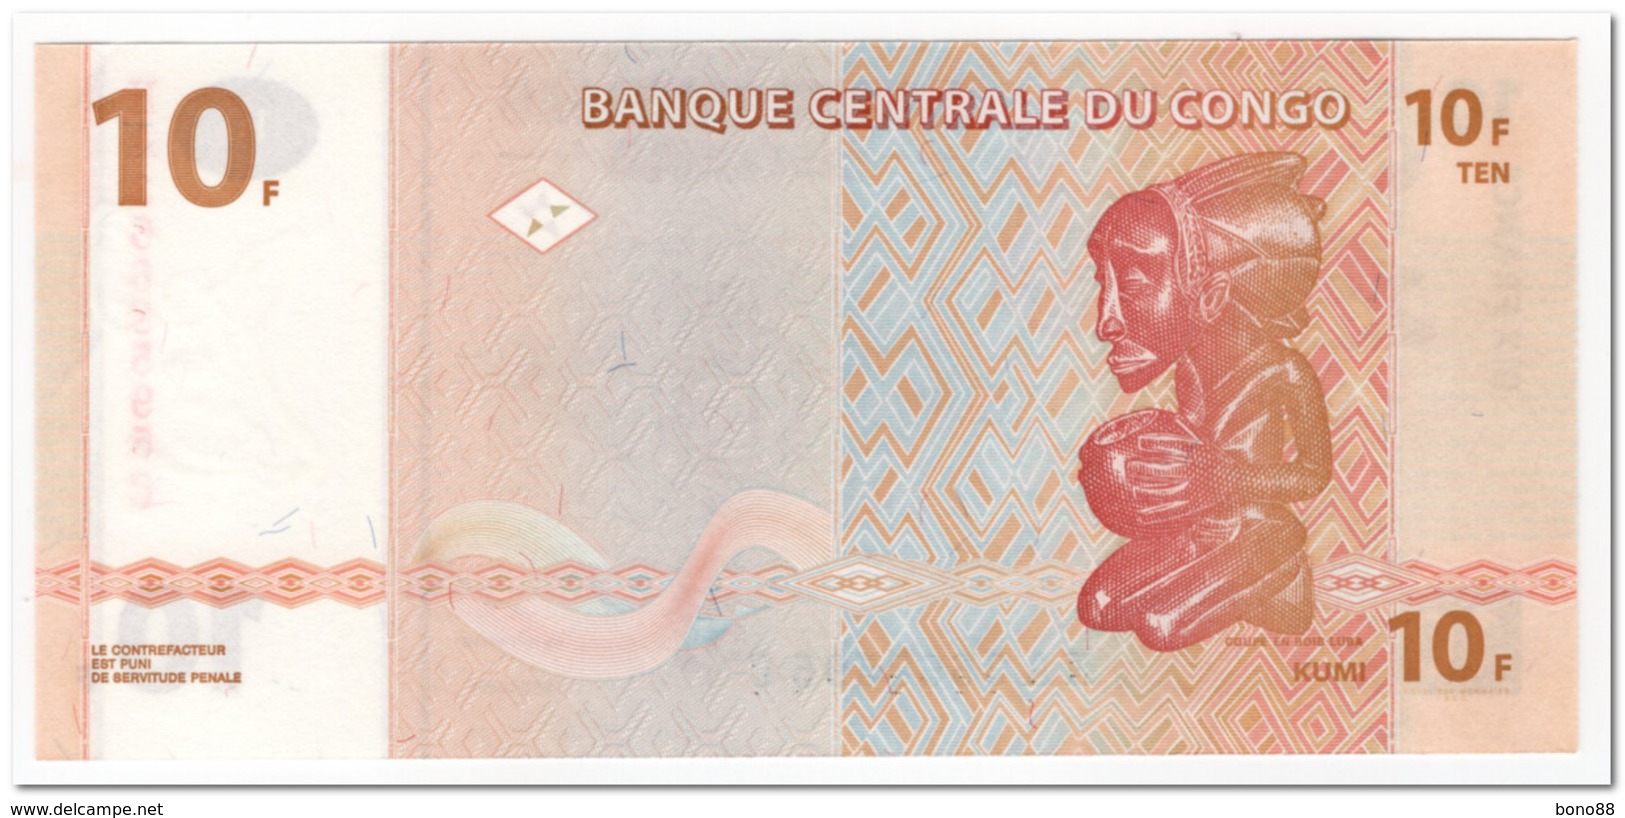 CONGO,10 FRANCS,2003,P.93, UNC - Democratic Republic Of The Congo & Zaire